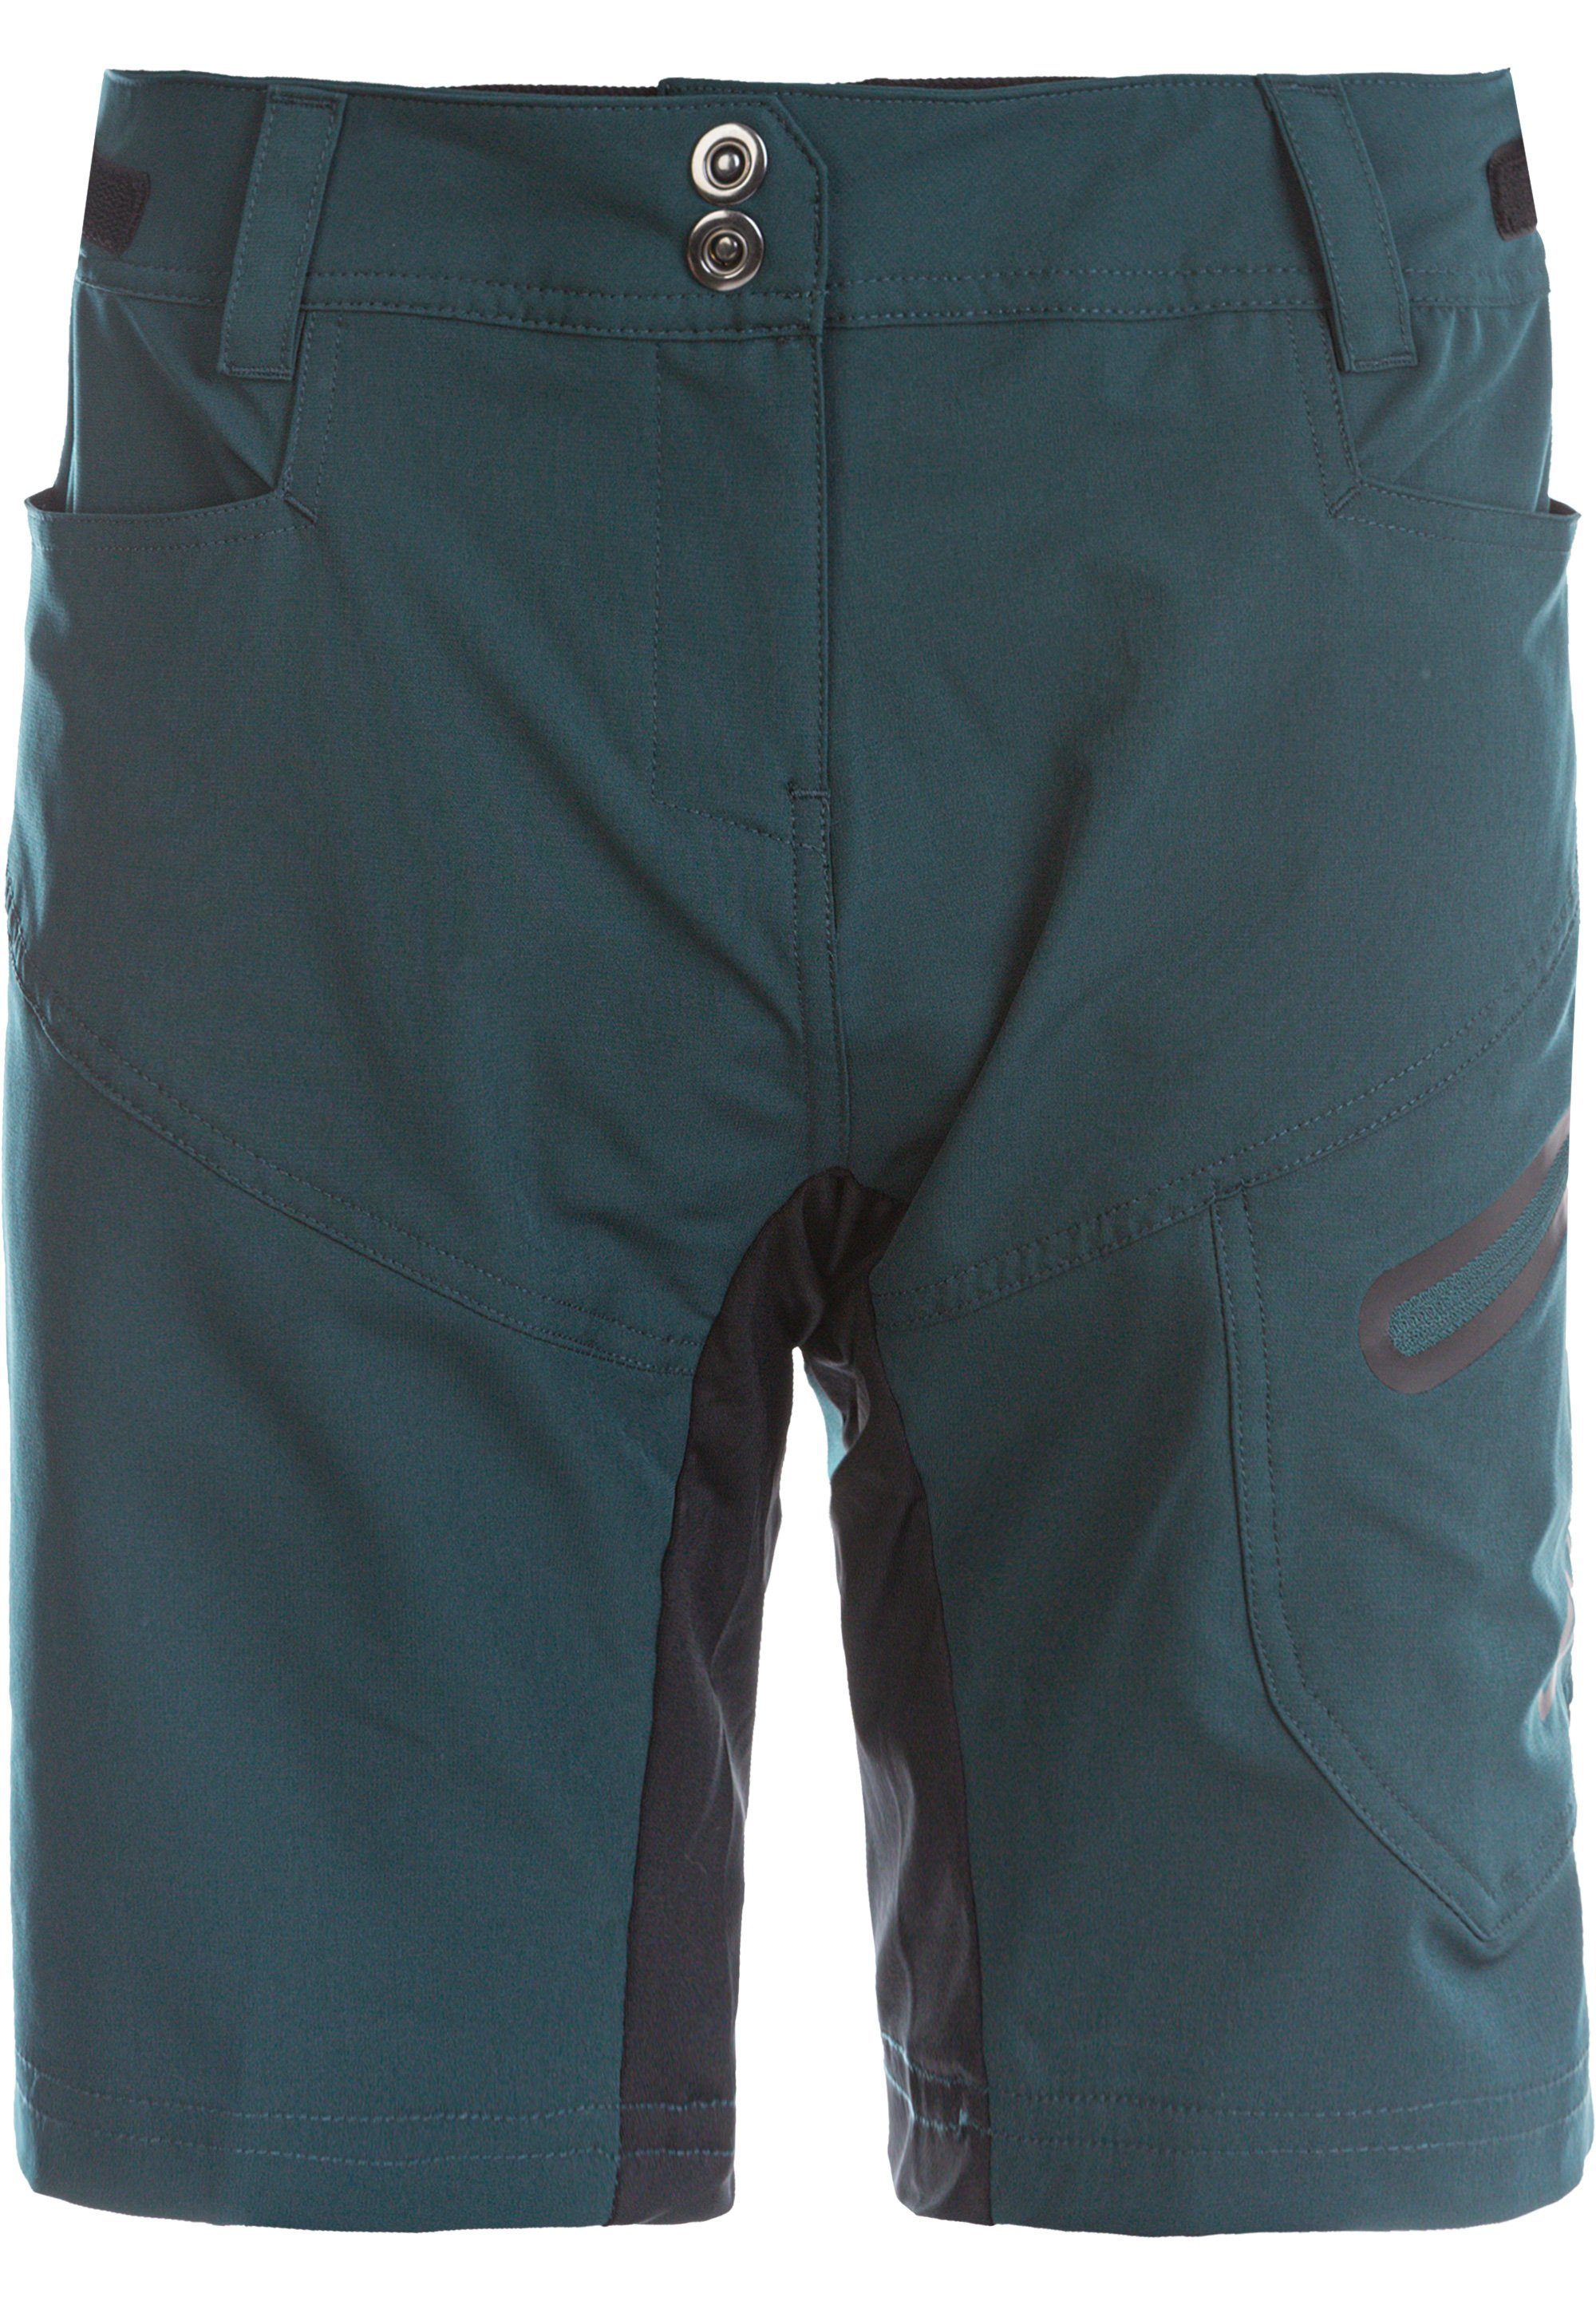 ENDURANCE Radhose Jamilla 2 Shorts dunkelgrün mit herausnehmbarer in 1 Innen-Tights W